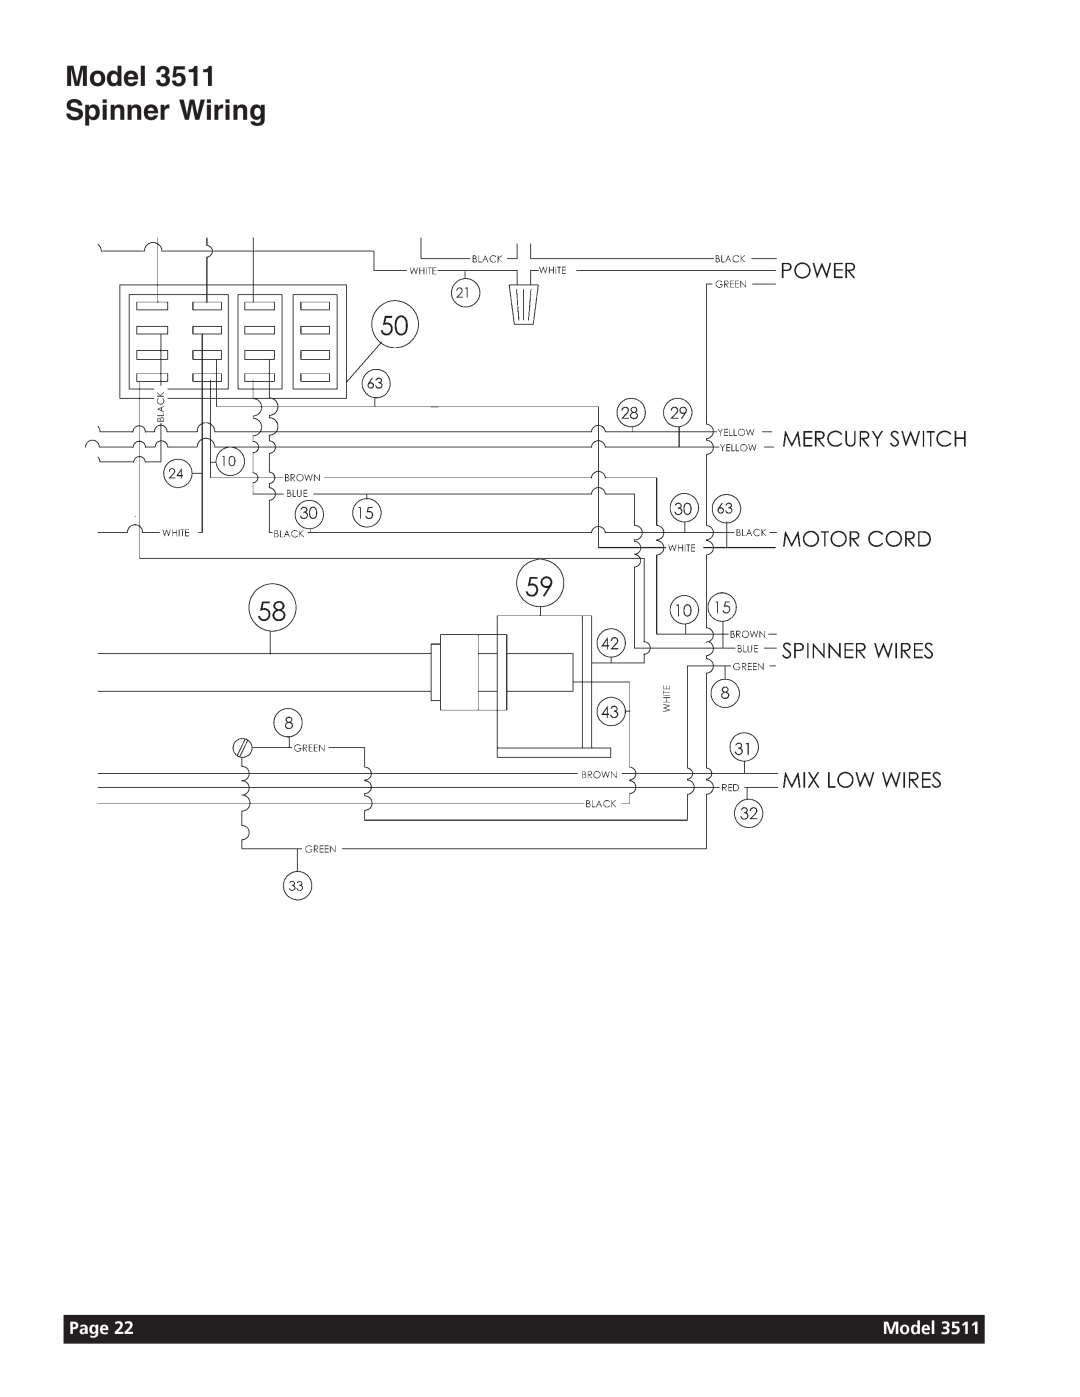 Grindmaster manual Model 3511 Spinner Wiring, Page 